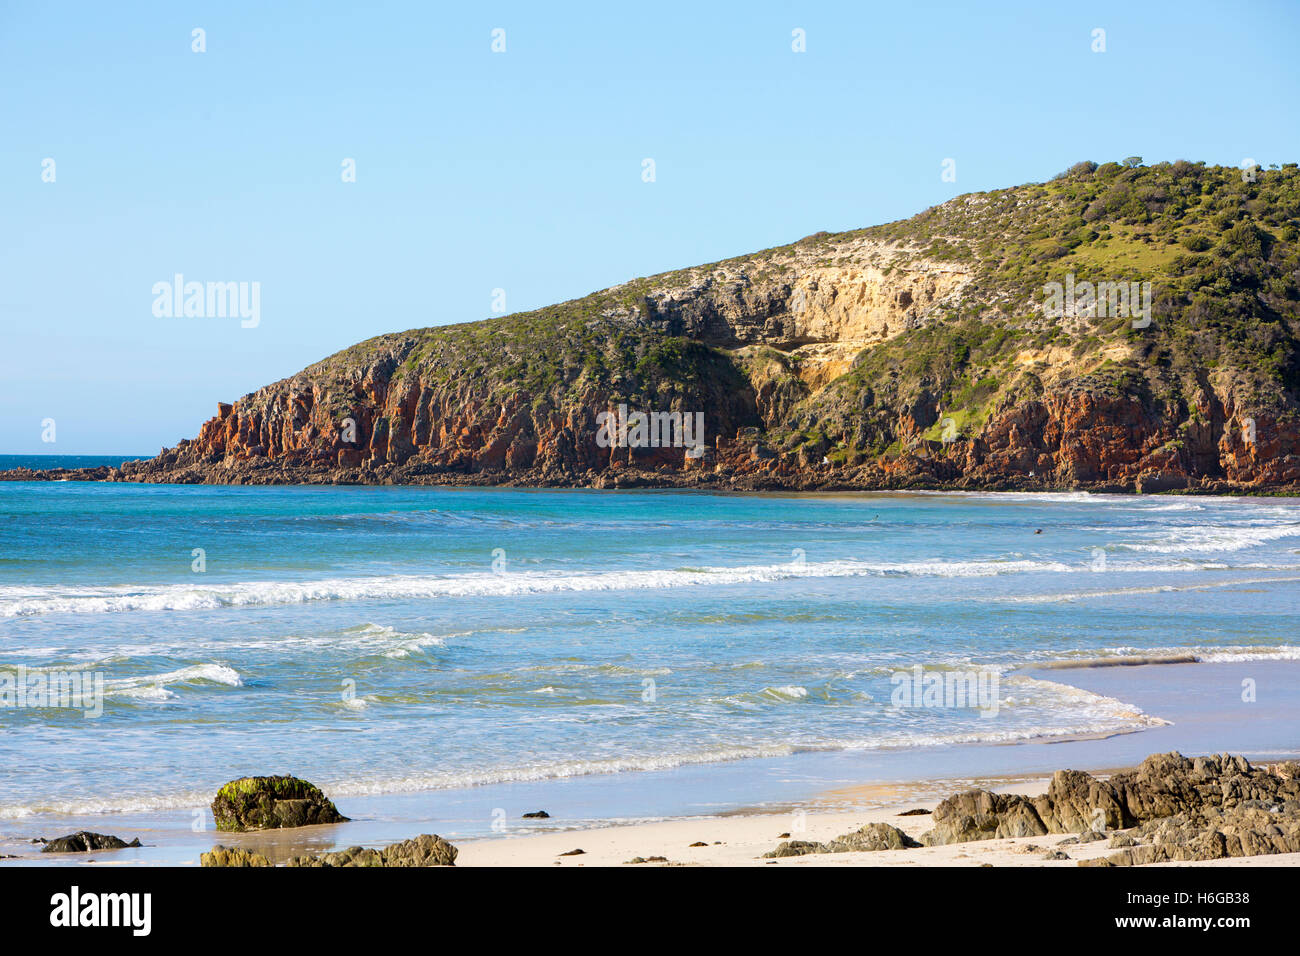 Snelling beach on the north coast of Kangaroo island,South australia Stock Photo